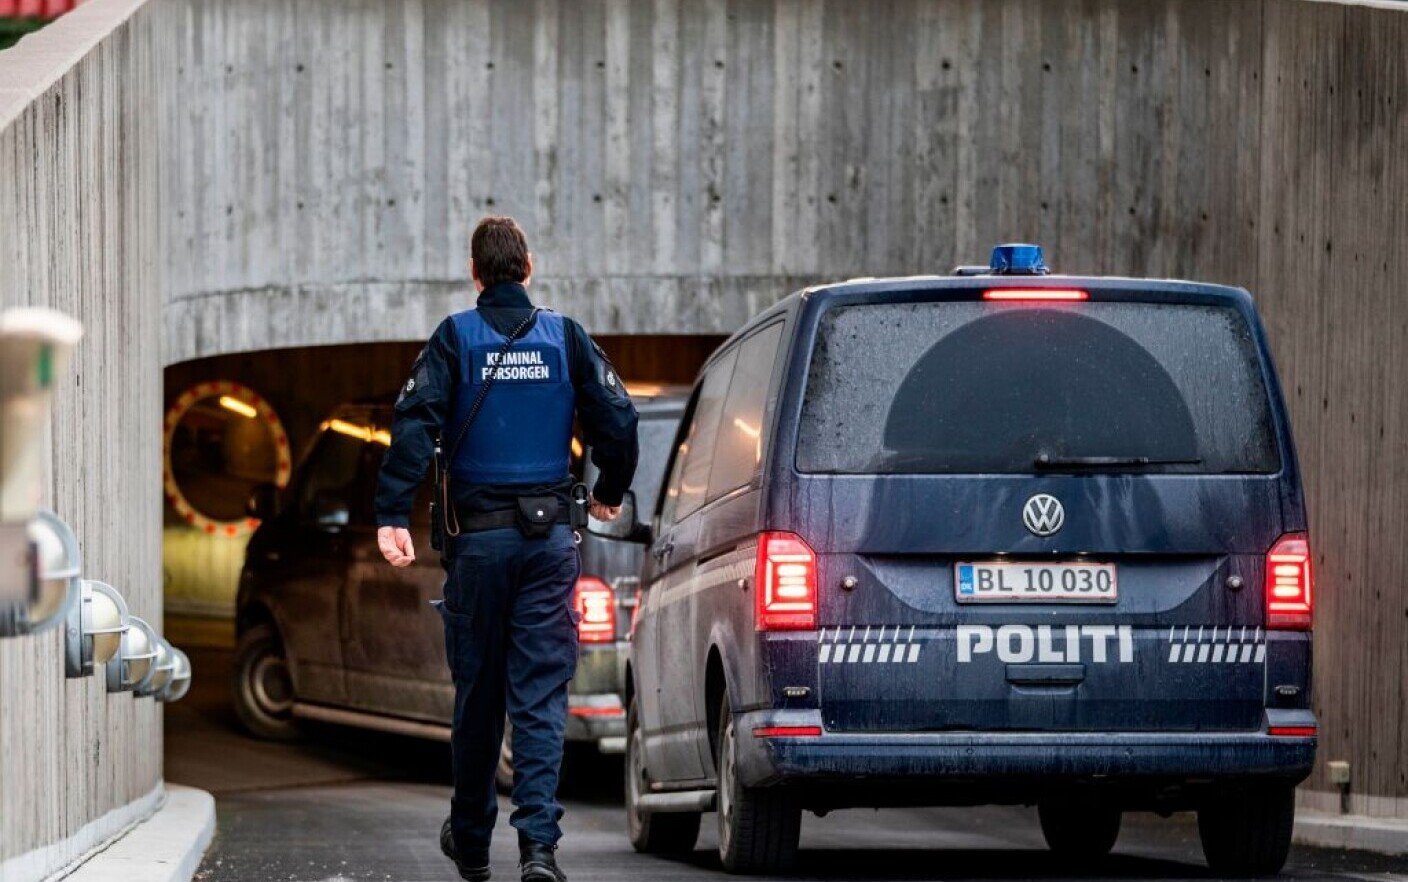  Presupusul autor danez al atacului armat de la Copenhaga are precedente psihiatrice